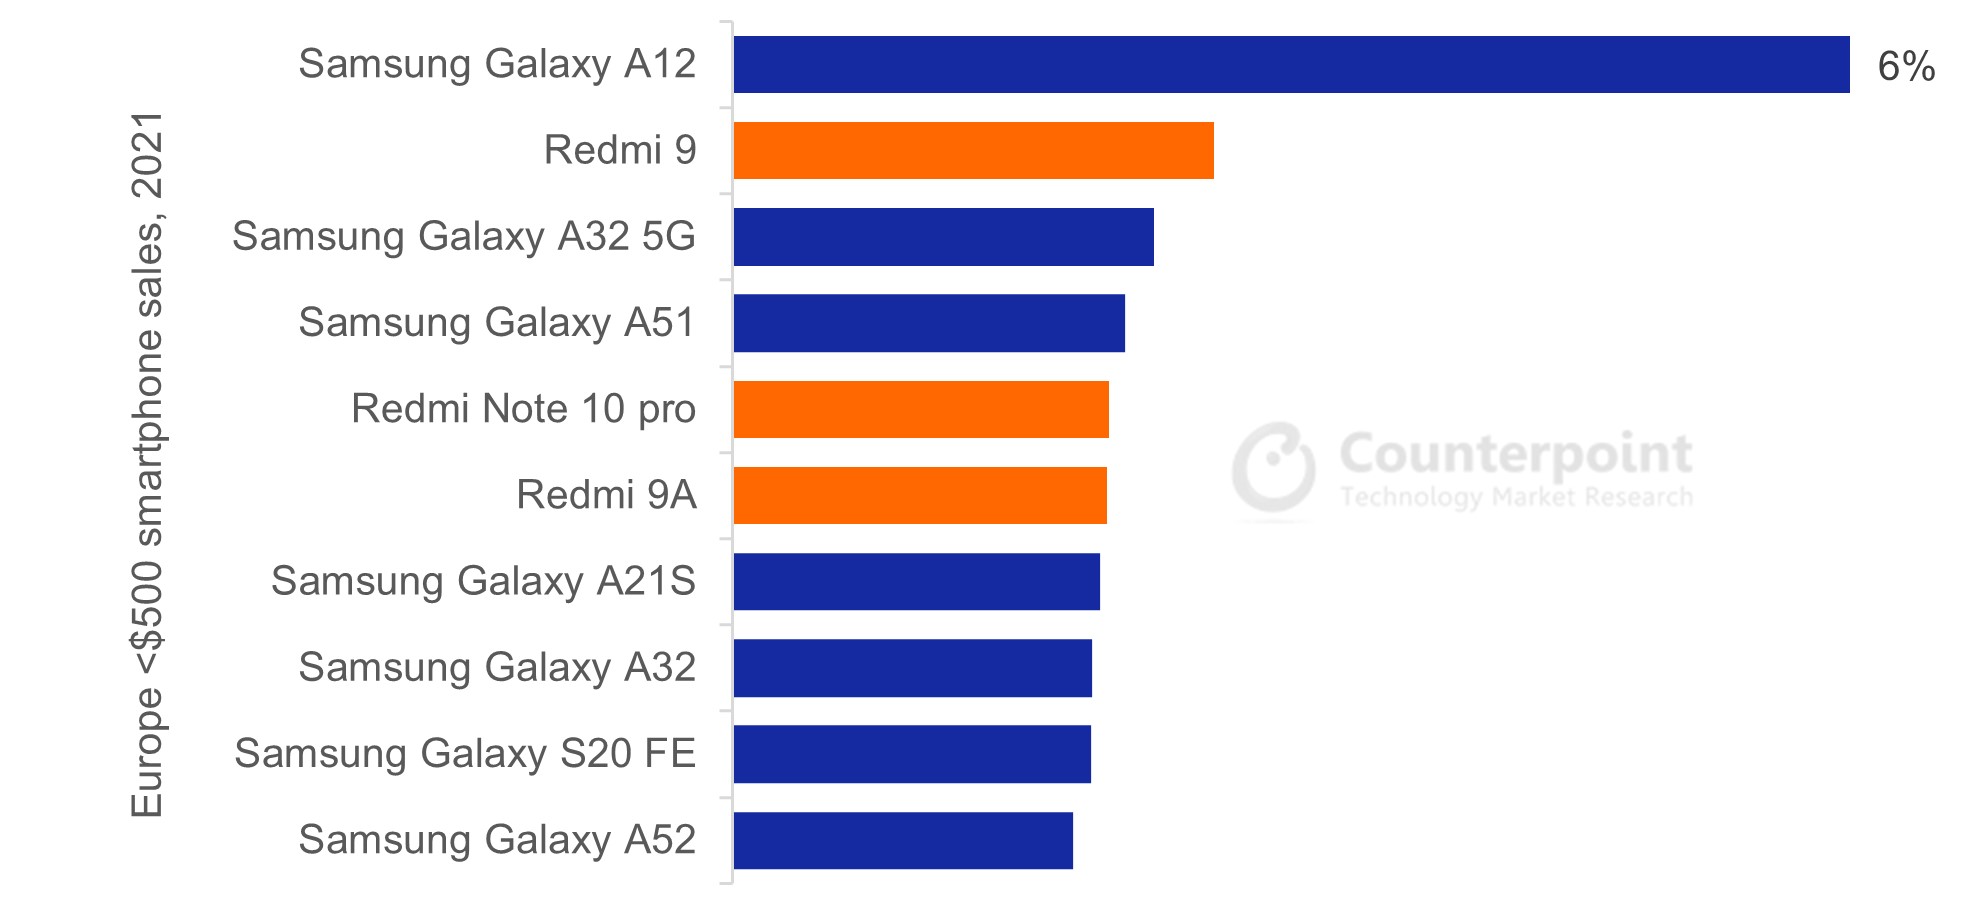 6 Samsung A Series smartphones in the sub-$500 top ten